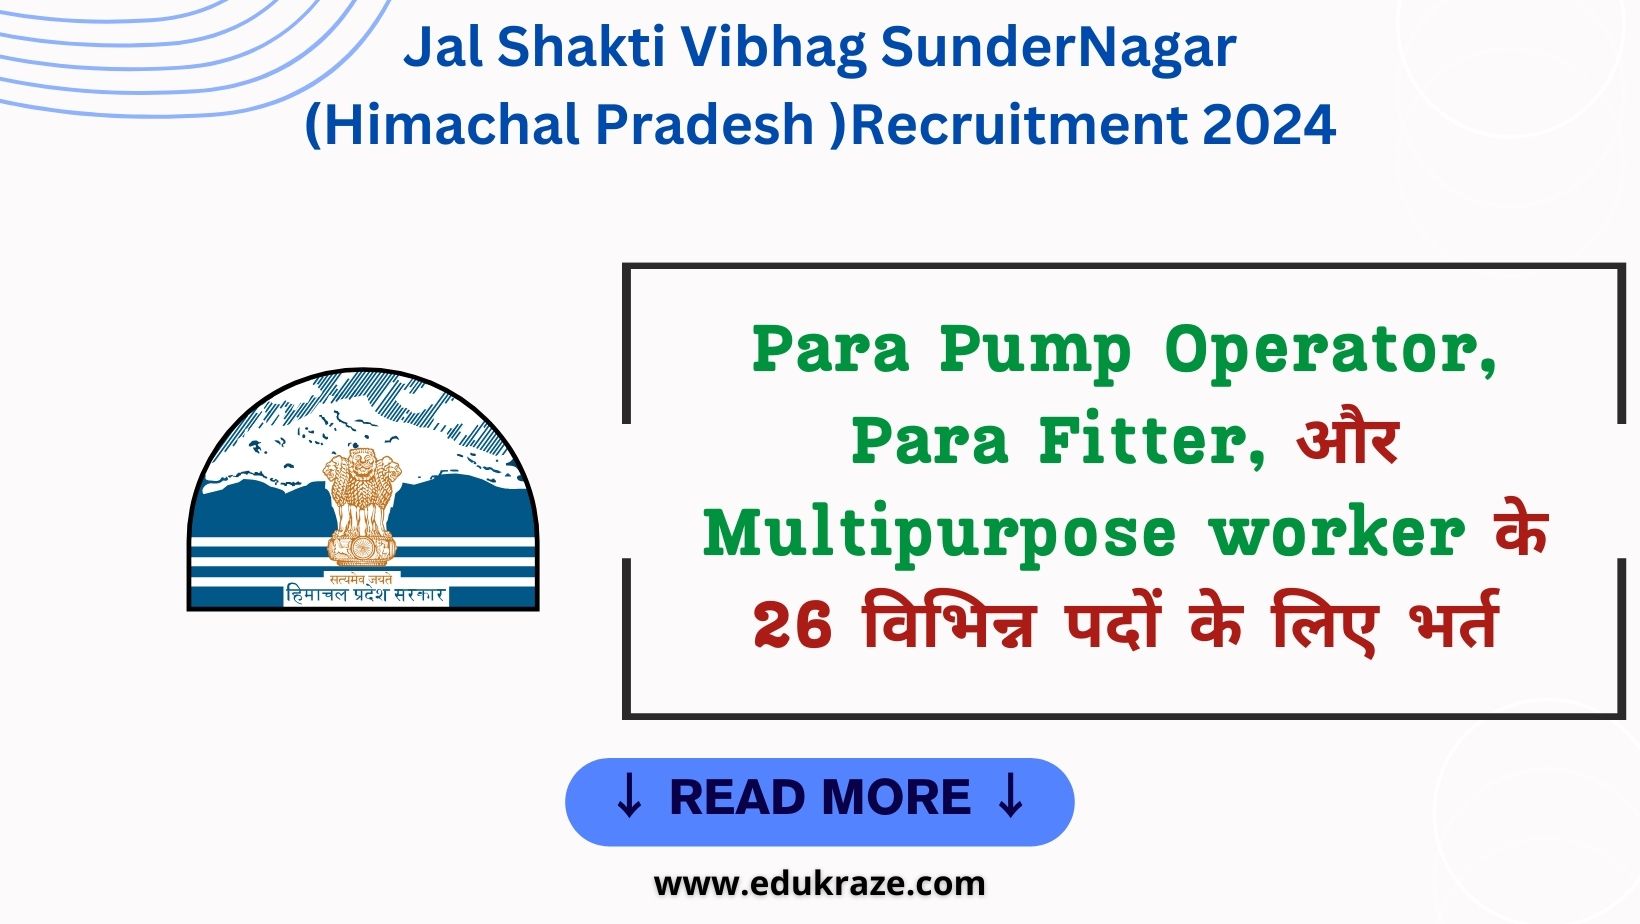 HP Jal Shakti Vibhag Division SunderNagar Recruitment 2024 for Para Pump Operator, Para Fitter & Multipurpose Worker